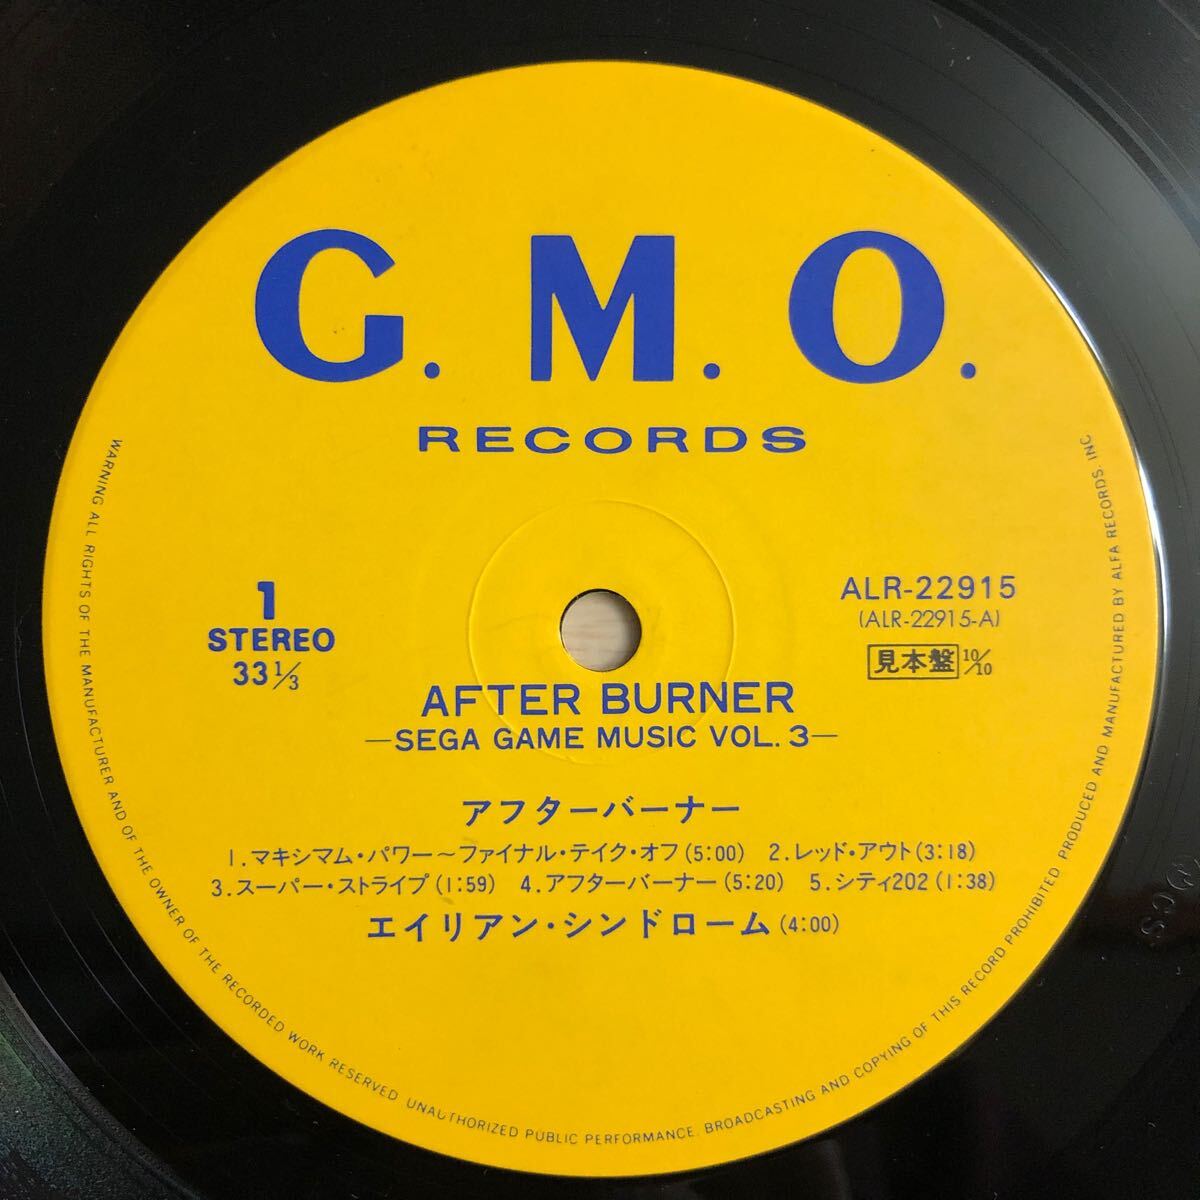 LP ゲーム・ミュージック SEGA GAME MUSIC VOL.3 AFTER BURNER アフターバーナー[G.M.O. RECORDS:帯:解説付き:エイリアンシンドローム収録]_画像4